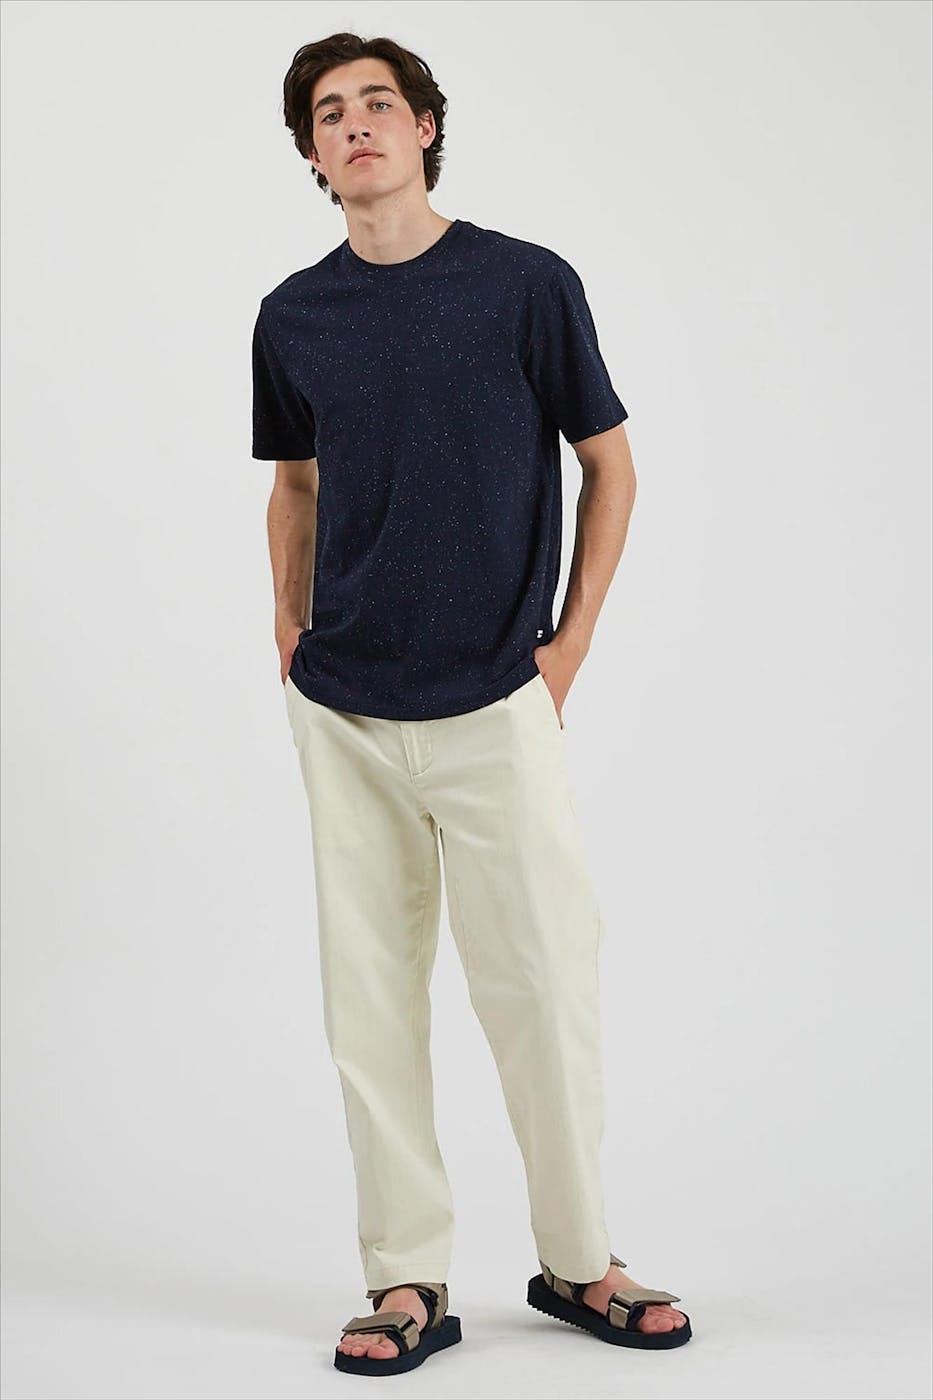 Minimum - Blauw gespikkelde Thure T-shirt